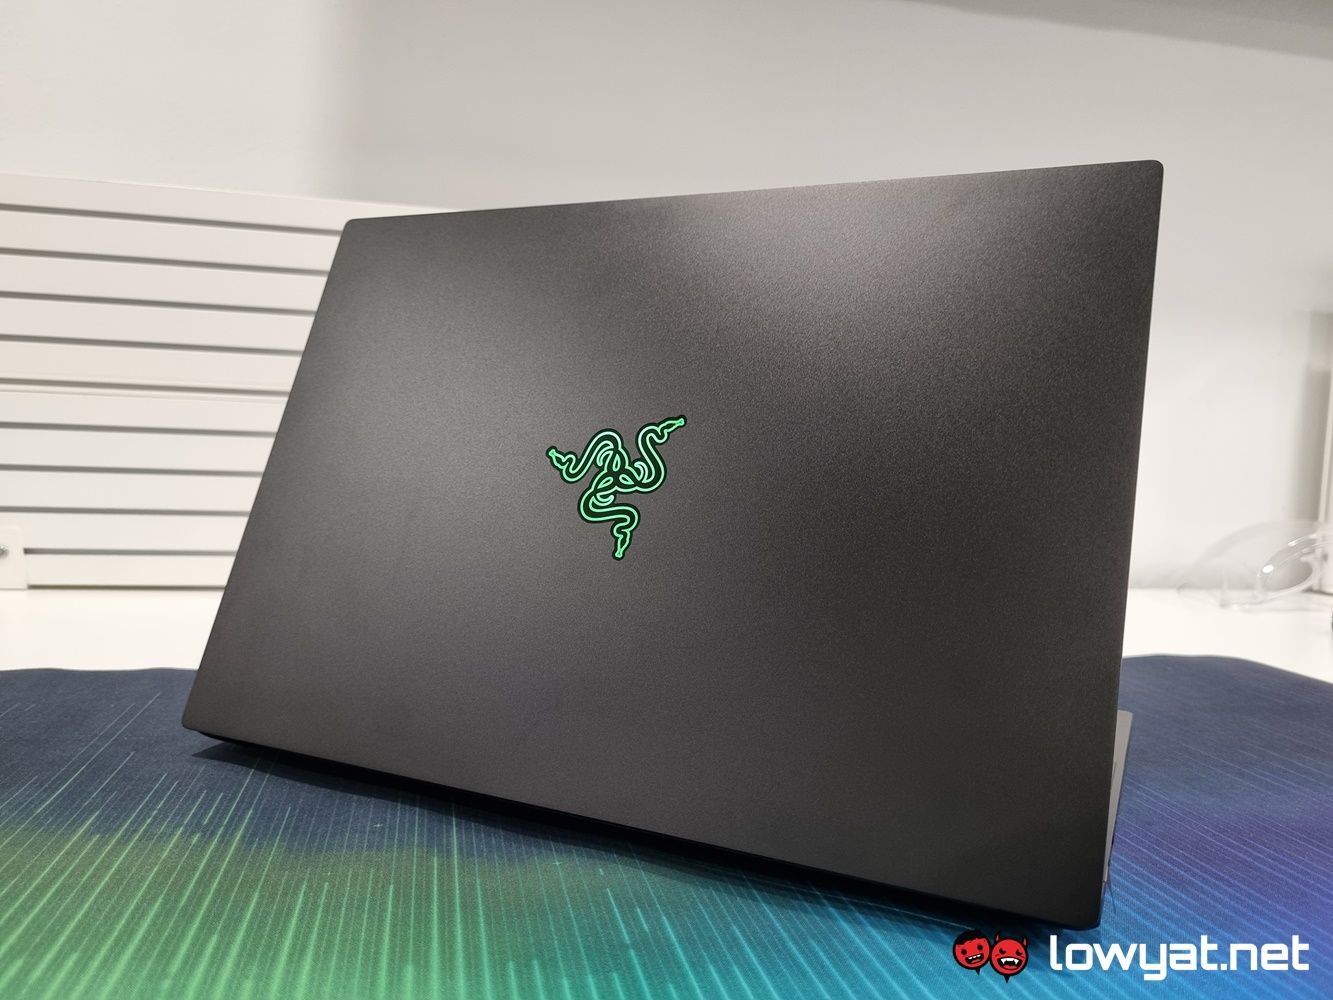 Razer Allegedly Working On An 18-Inch Blade Laptop - 'Lowyat.net' News